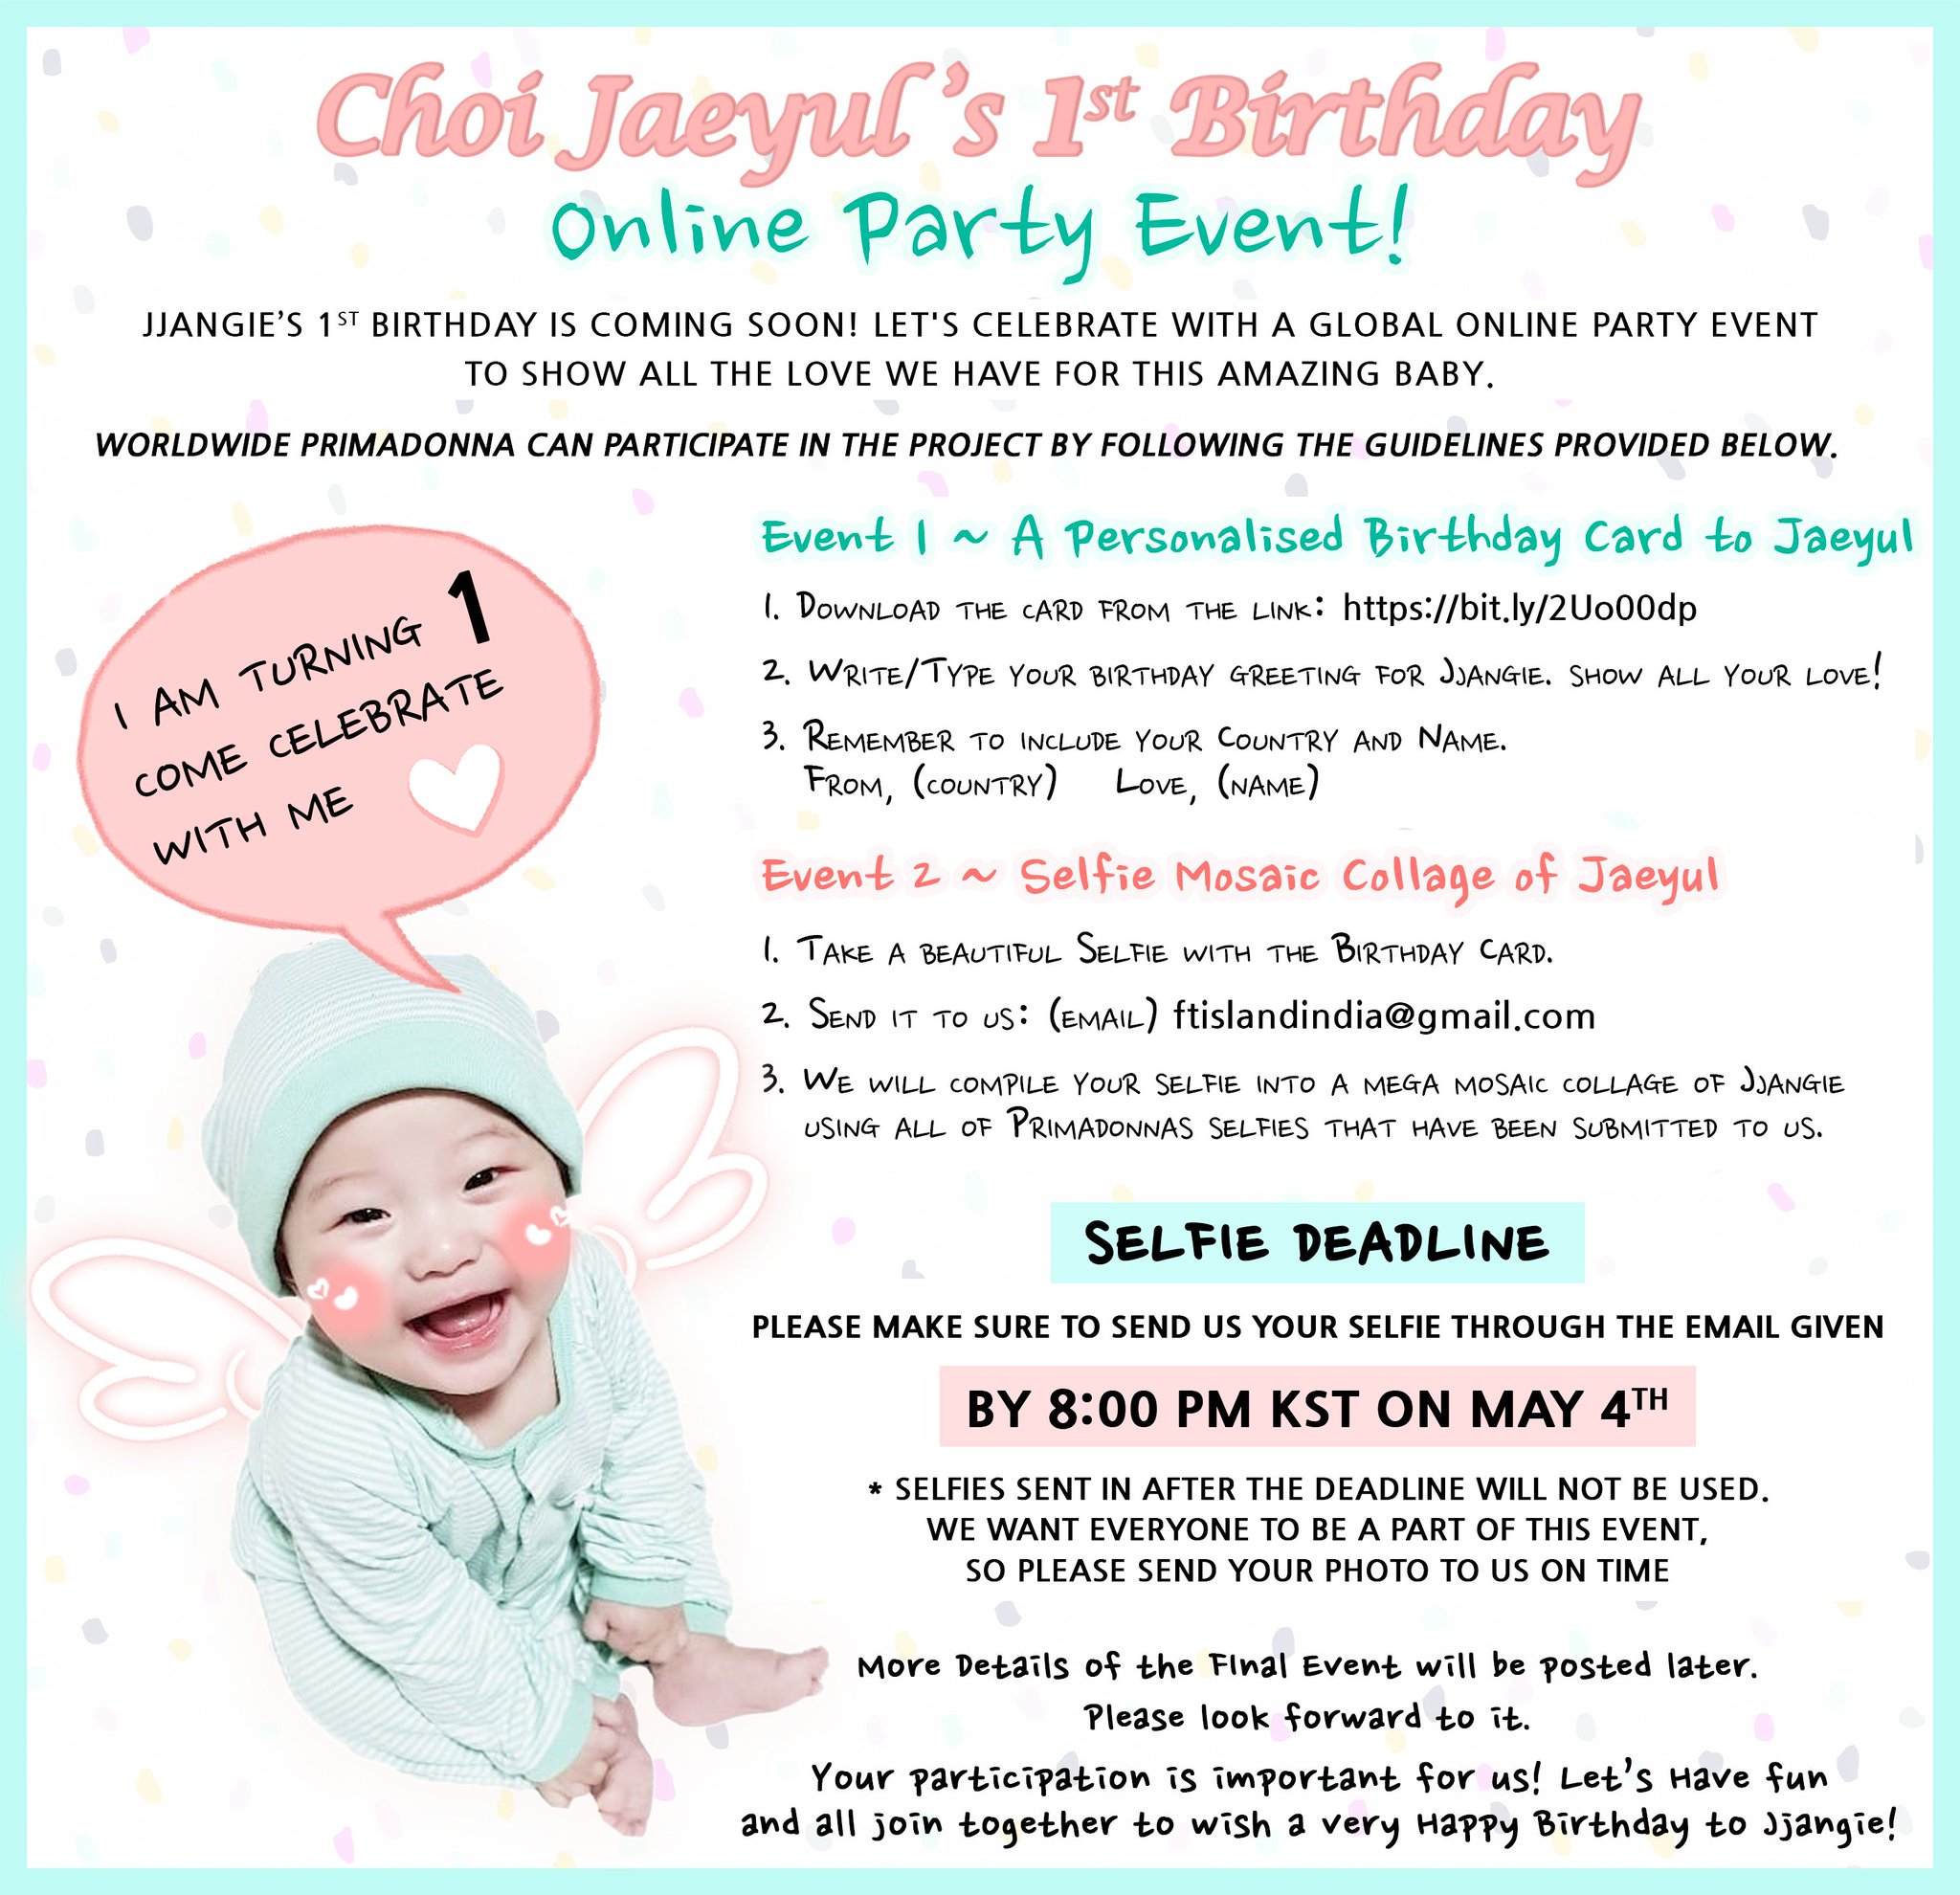 FTISLAND INDIA 🇮🇳 on Twitter: "🎉 Jaeyul Birthday Party Event